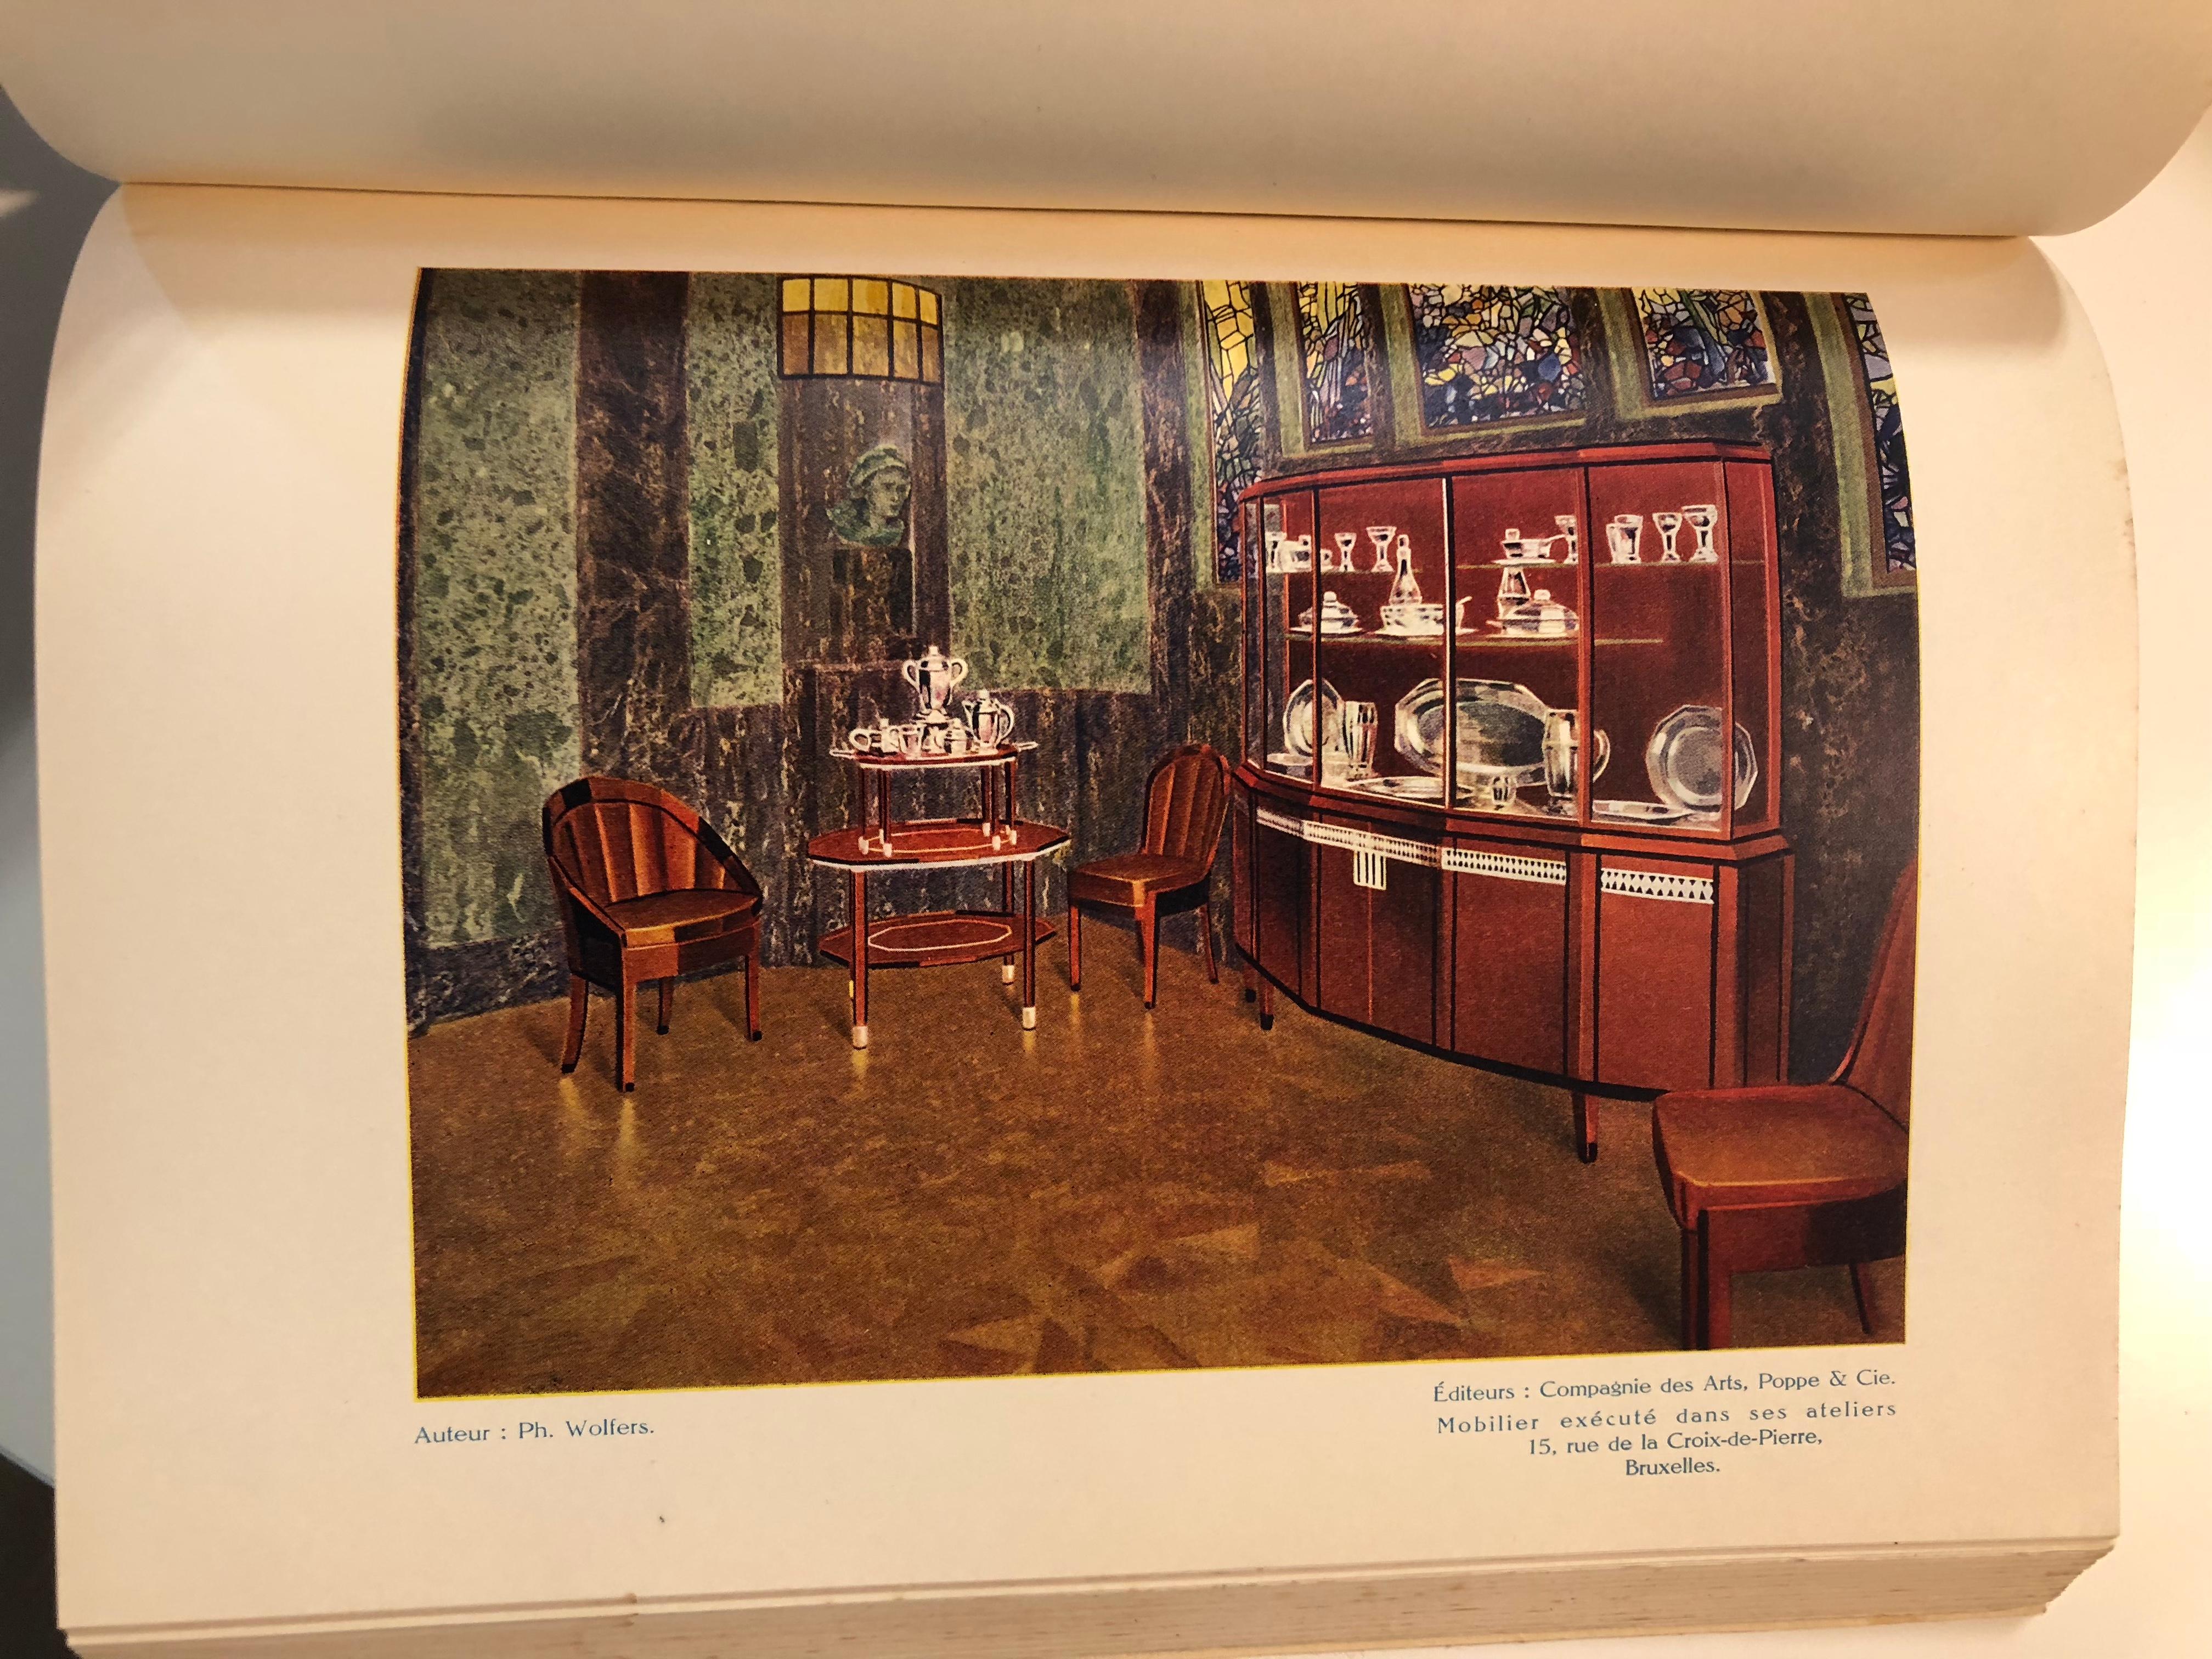 Paper Collection of Catalogs 1925 Paris Decorative Arts Expo For Sale